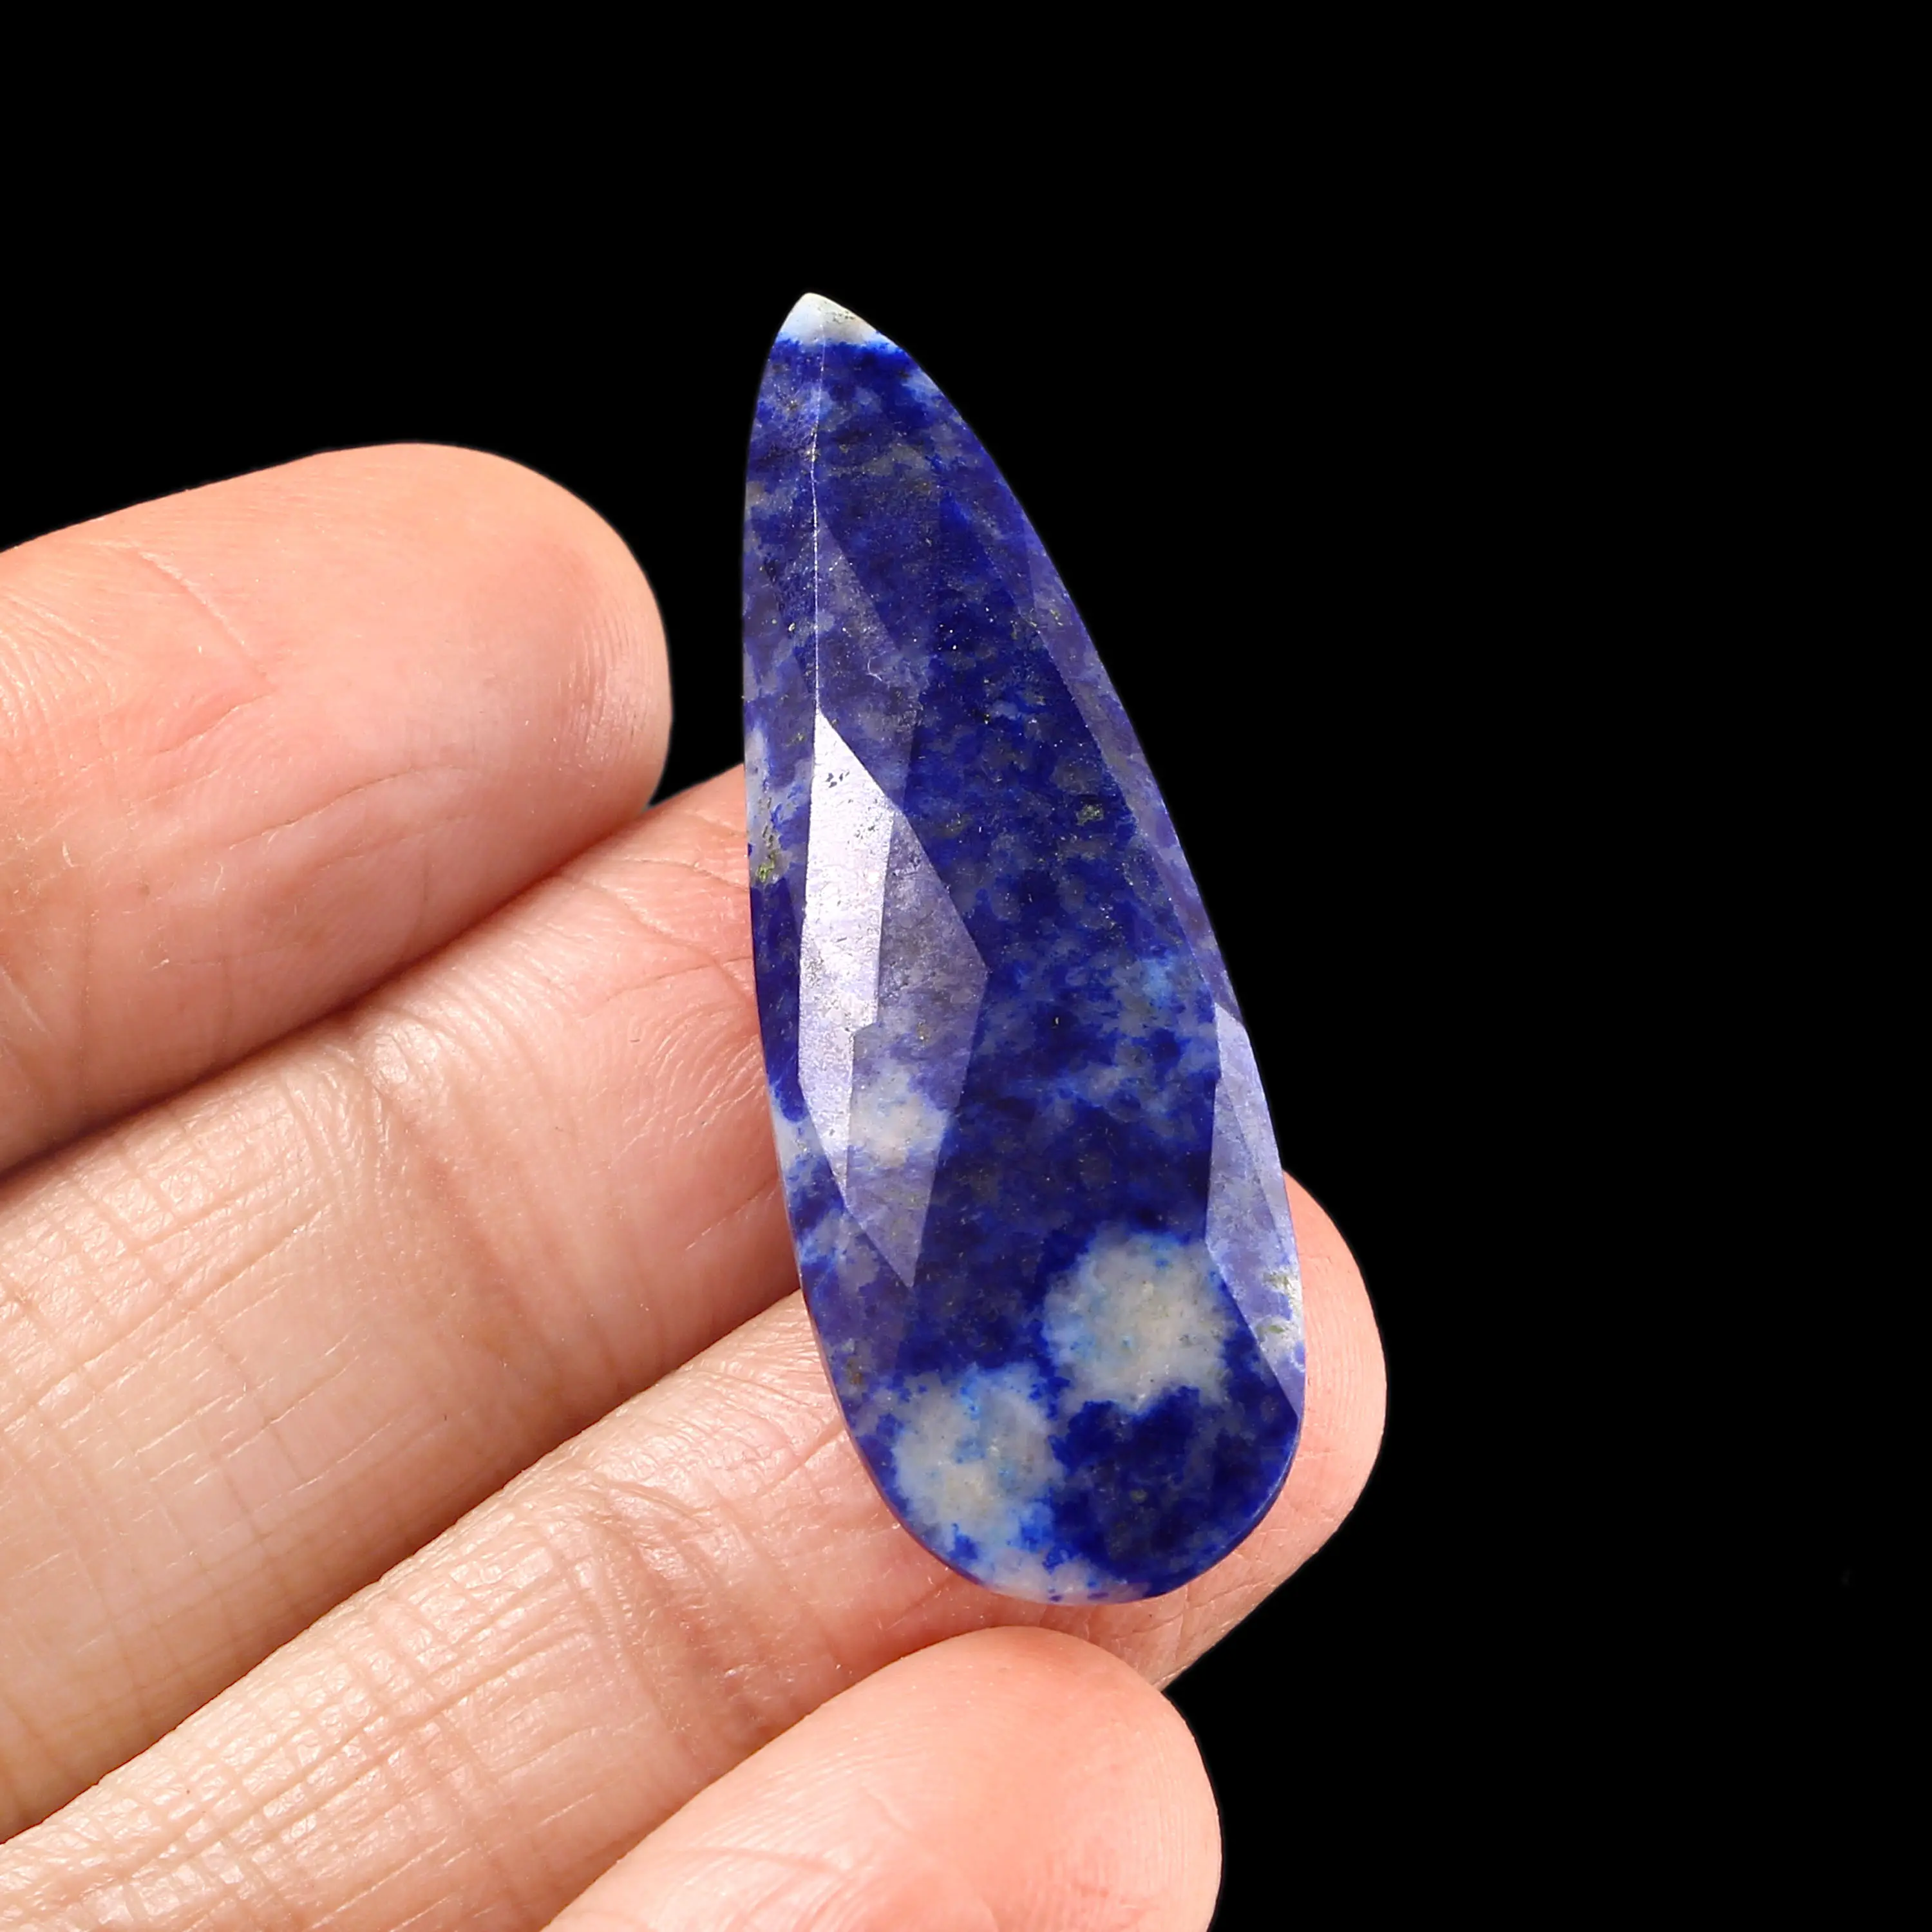 Details about   Wholesale ~ 100% Natural Quality Blue Sodalite Mix Cabochon Loose Gemstones Bulk 